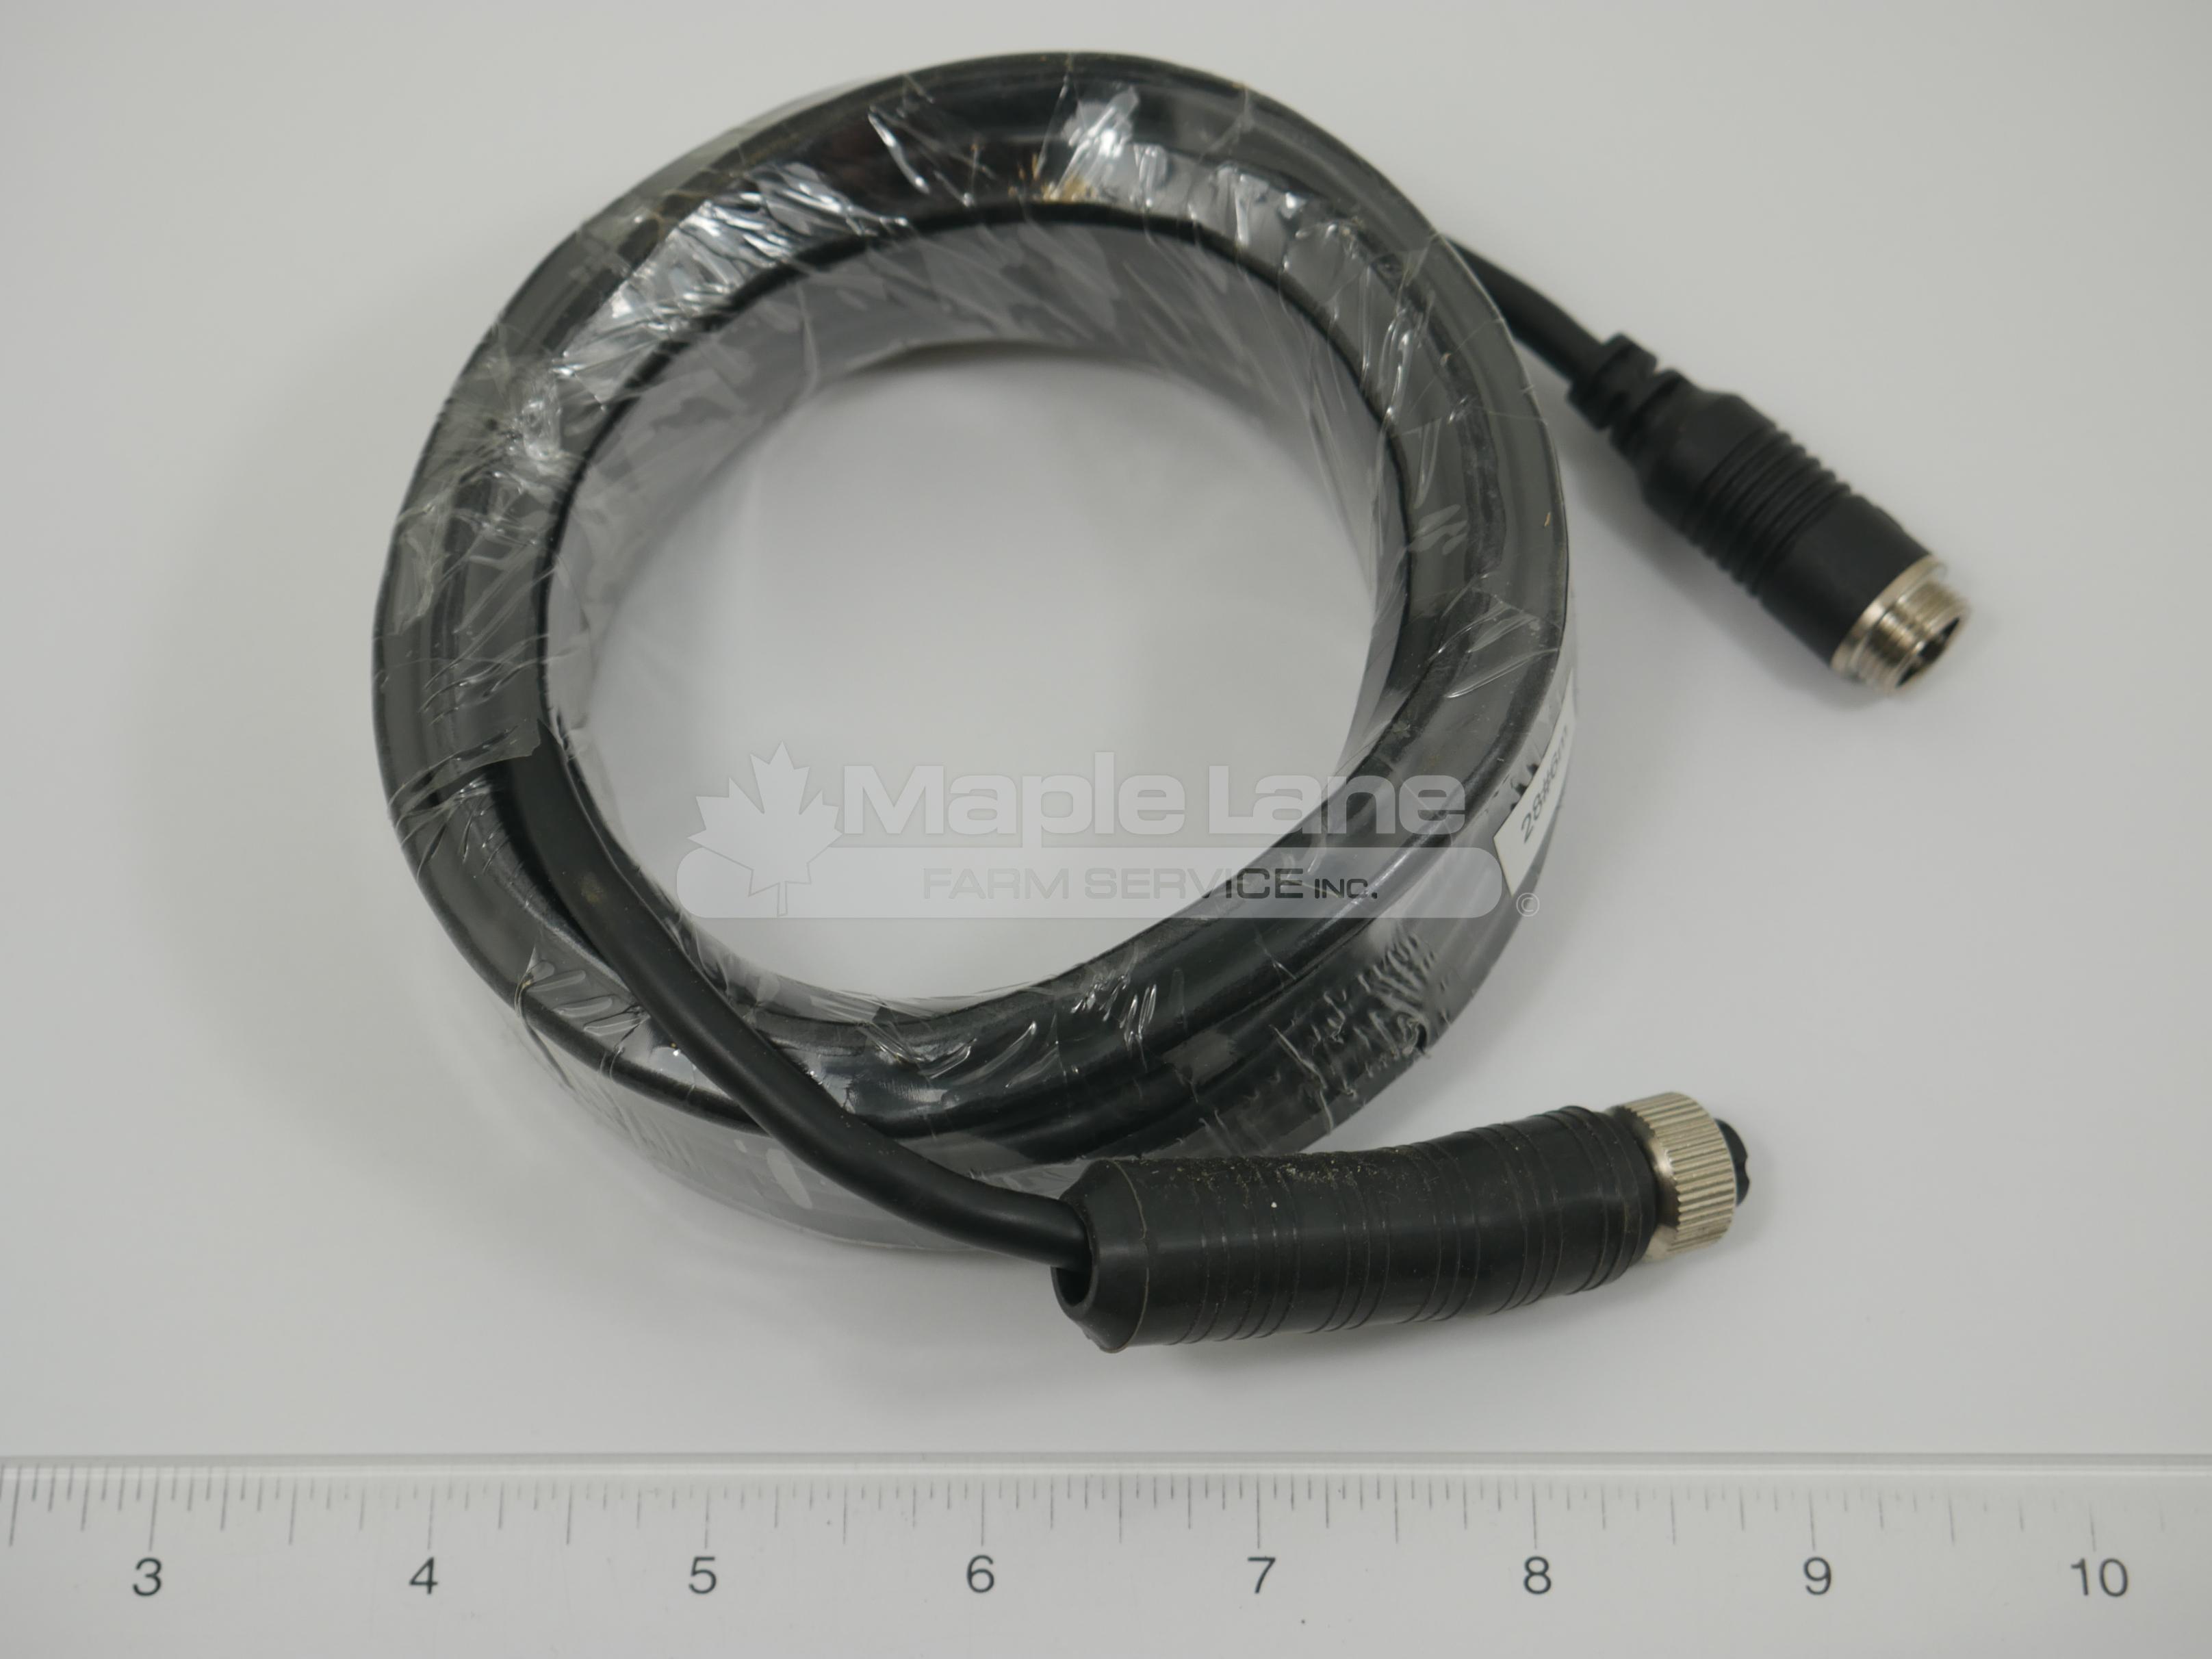 DMOV-EC20 PVC Cable 20'